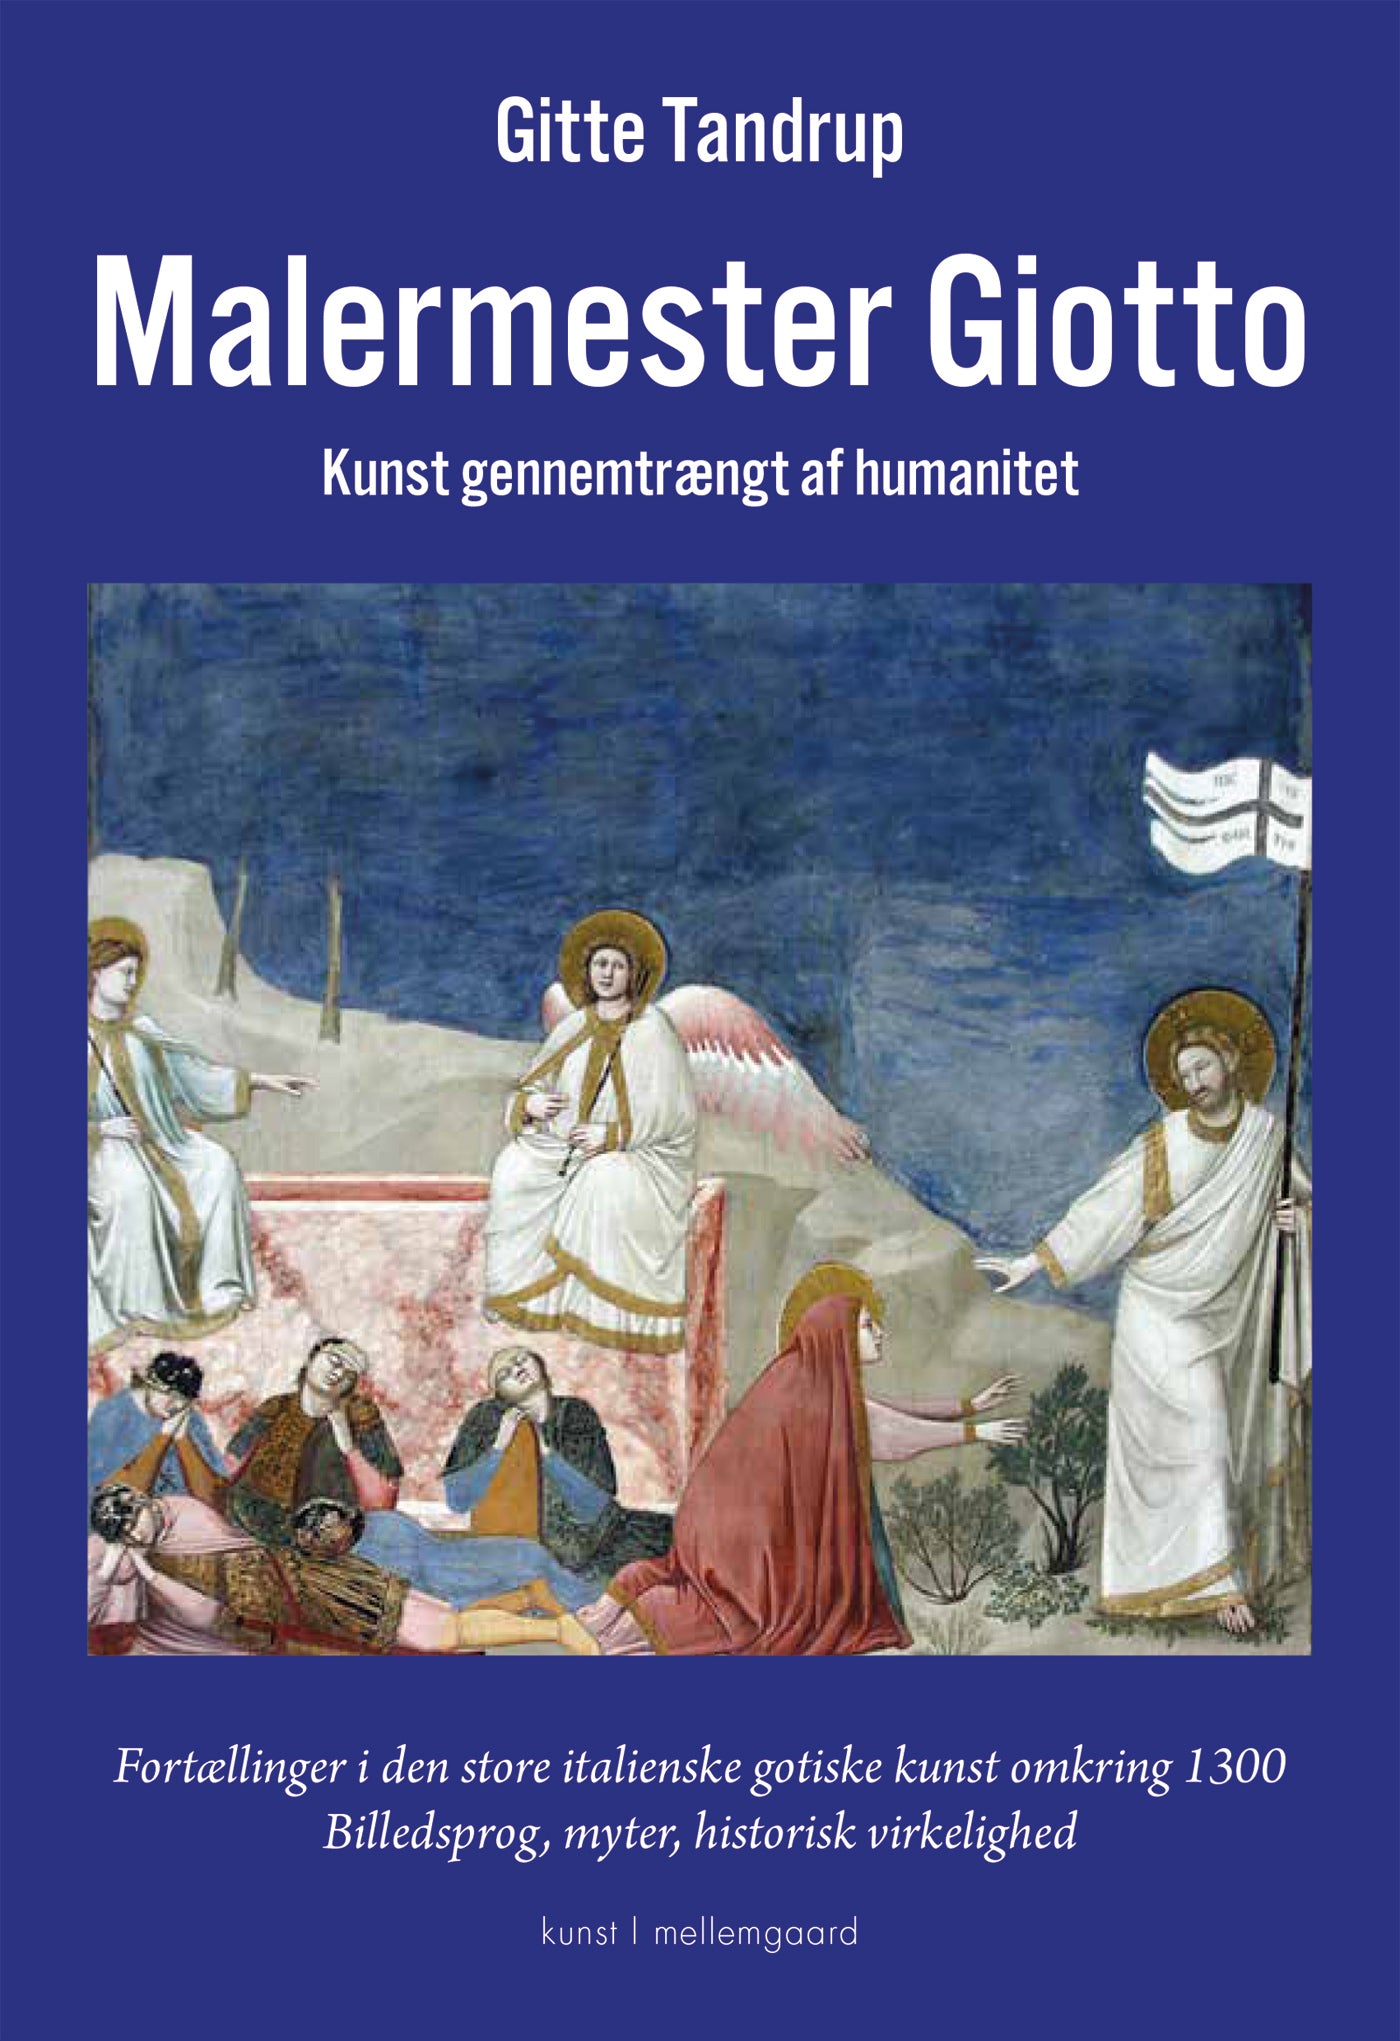 Malermester Giotto